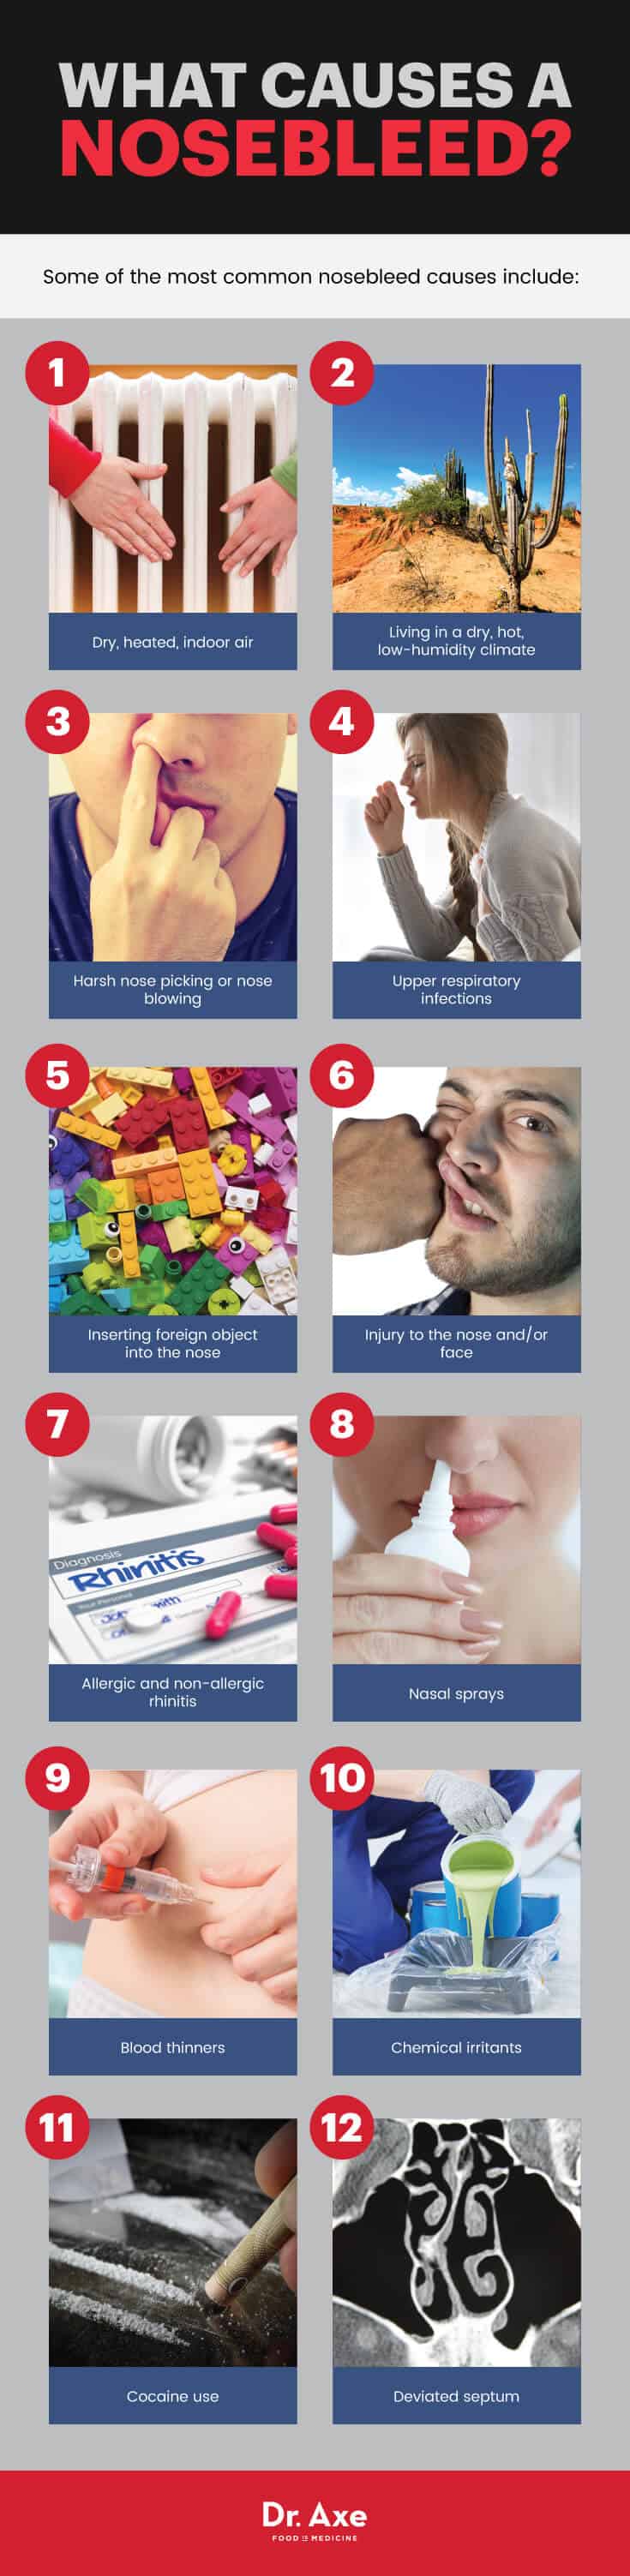 How to stop a nosebleed: nosebleed causes - Dr. Axe